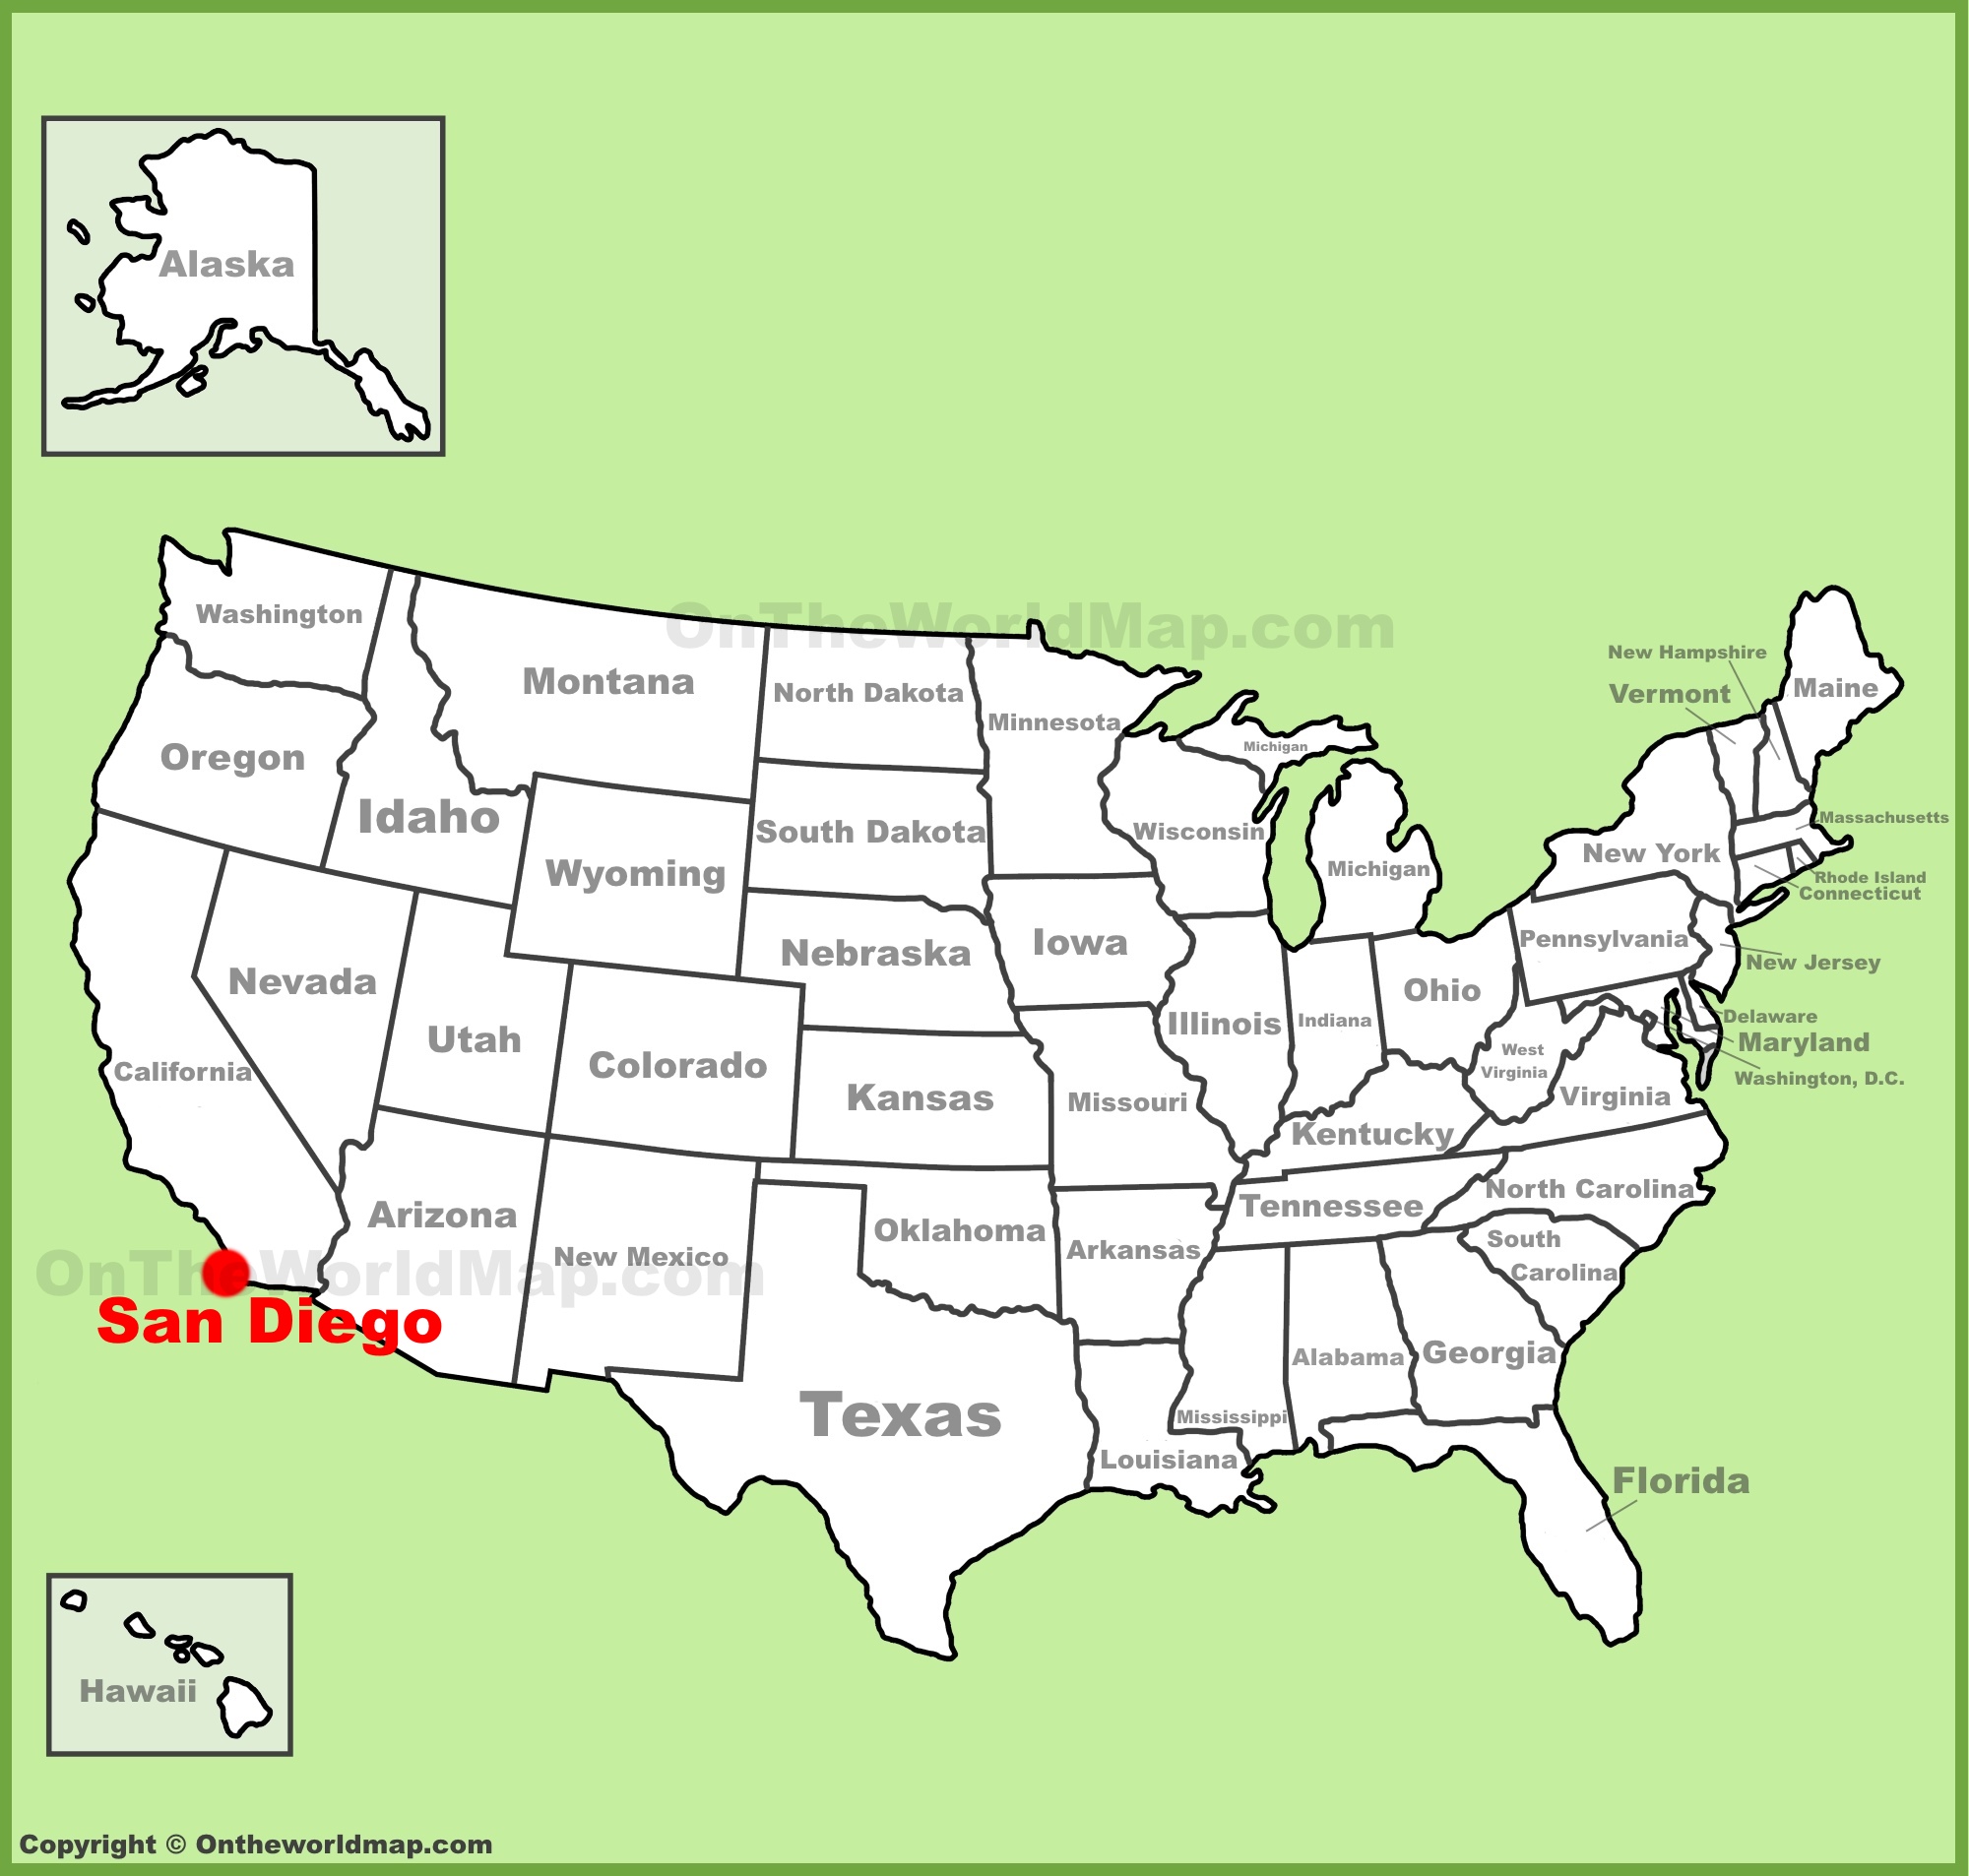 San Diego Location On The U S Map